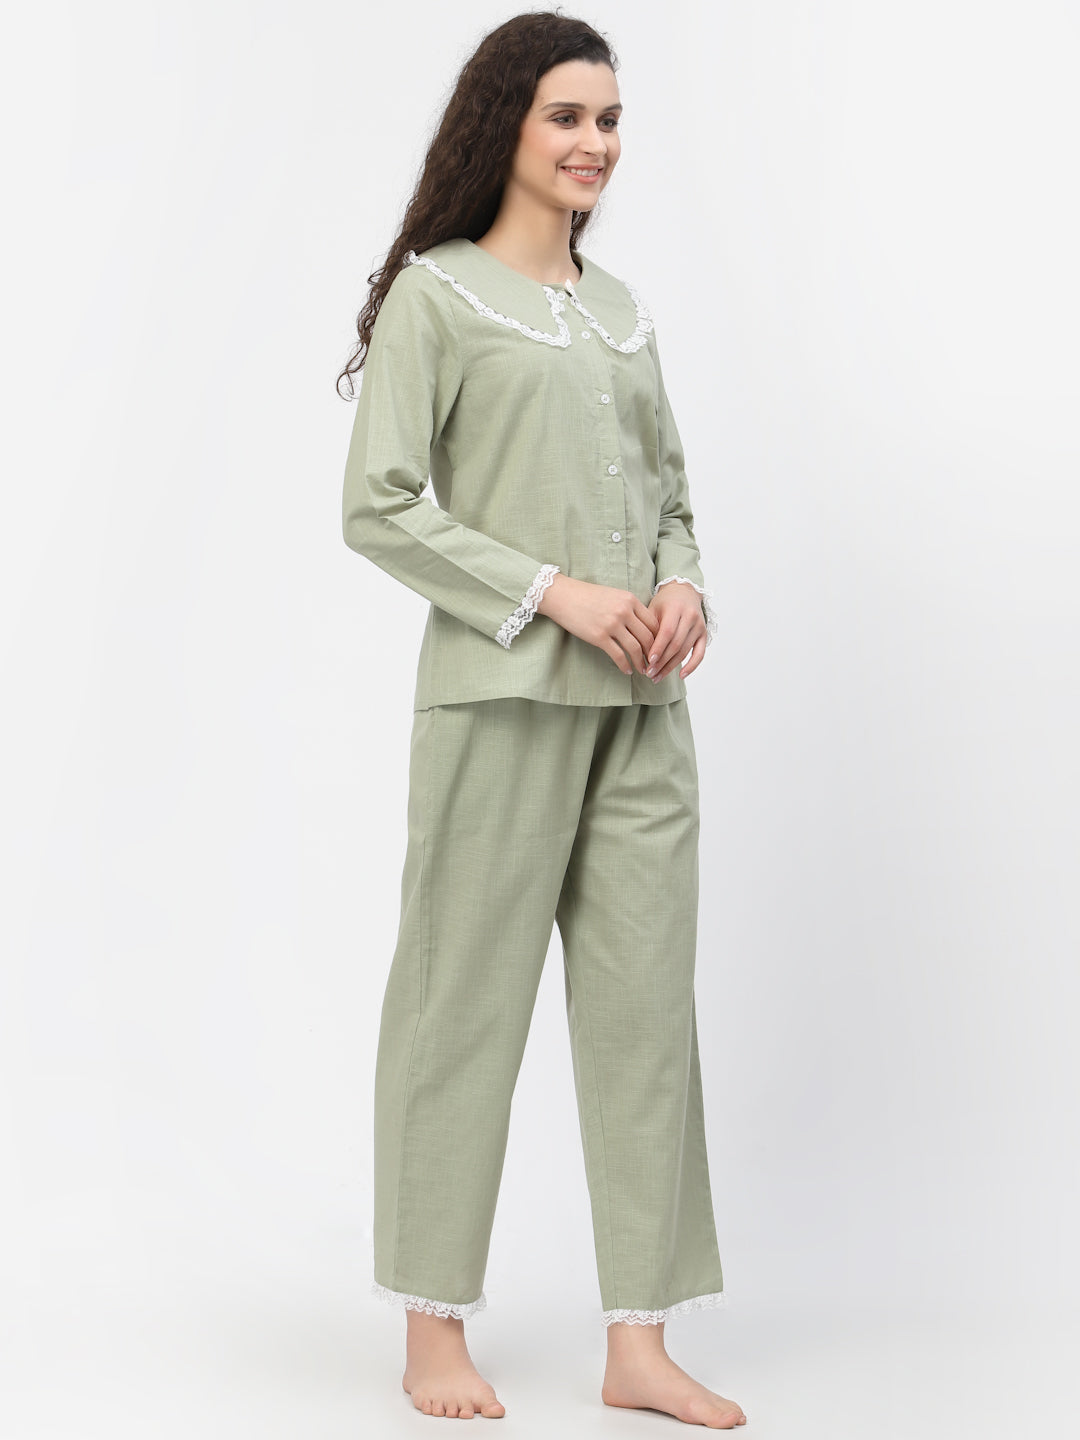 Blanc9 Lacy Cotton Green Pretty Pyjama Night Suit-B9NW41GN